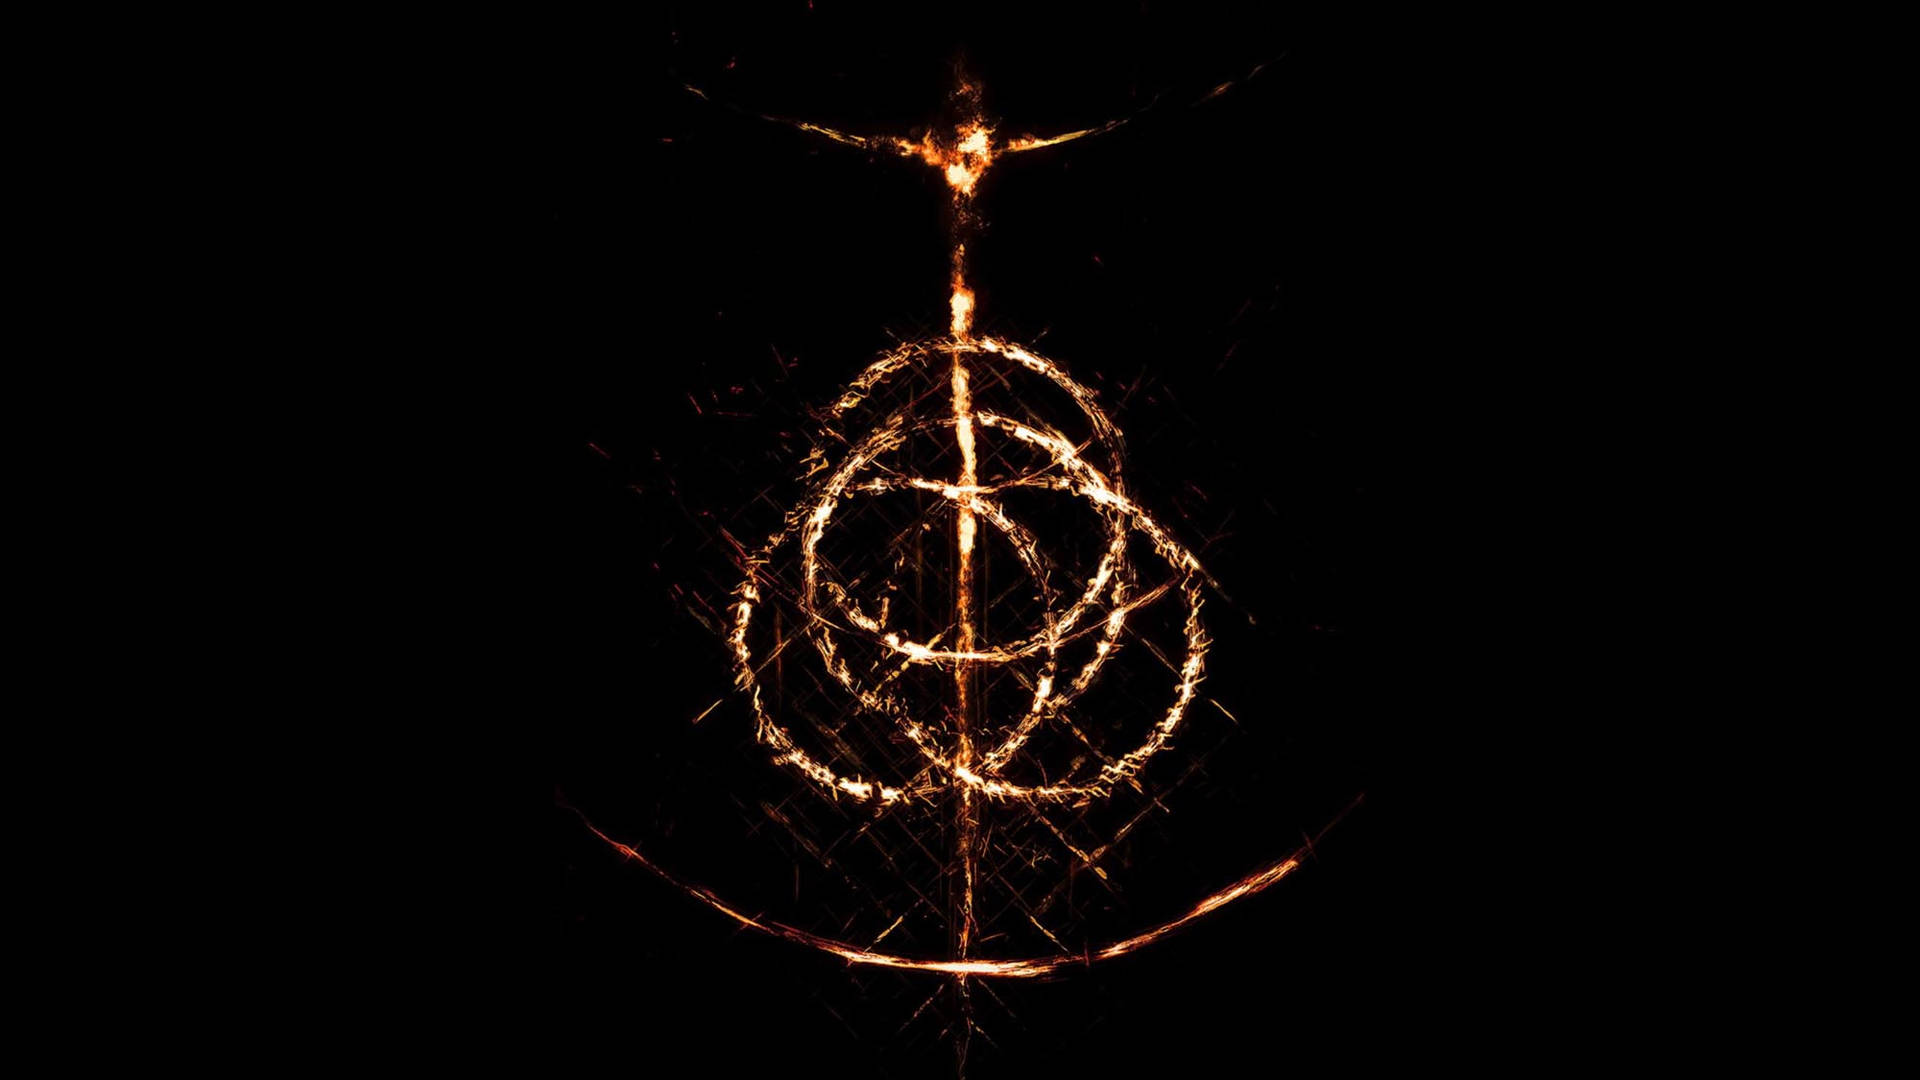 Elden Ring Symbol